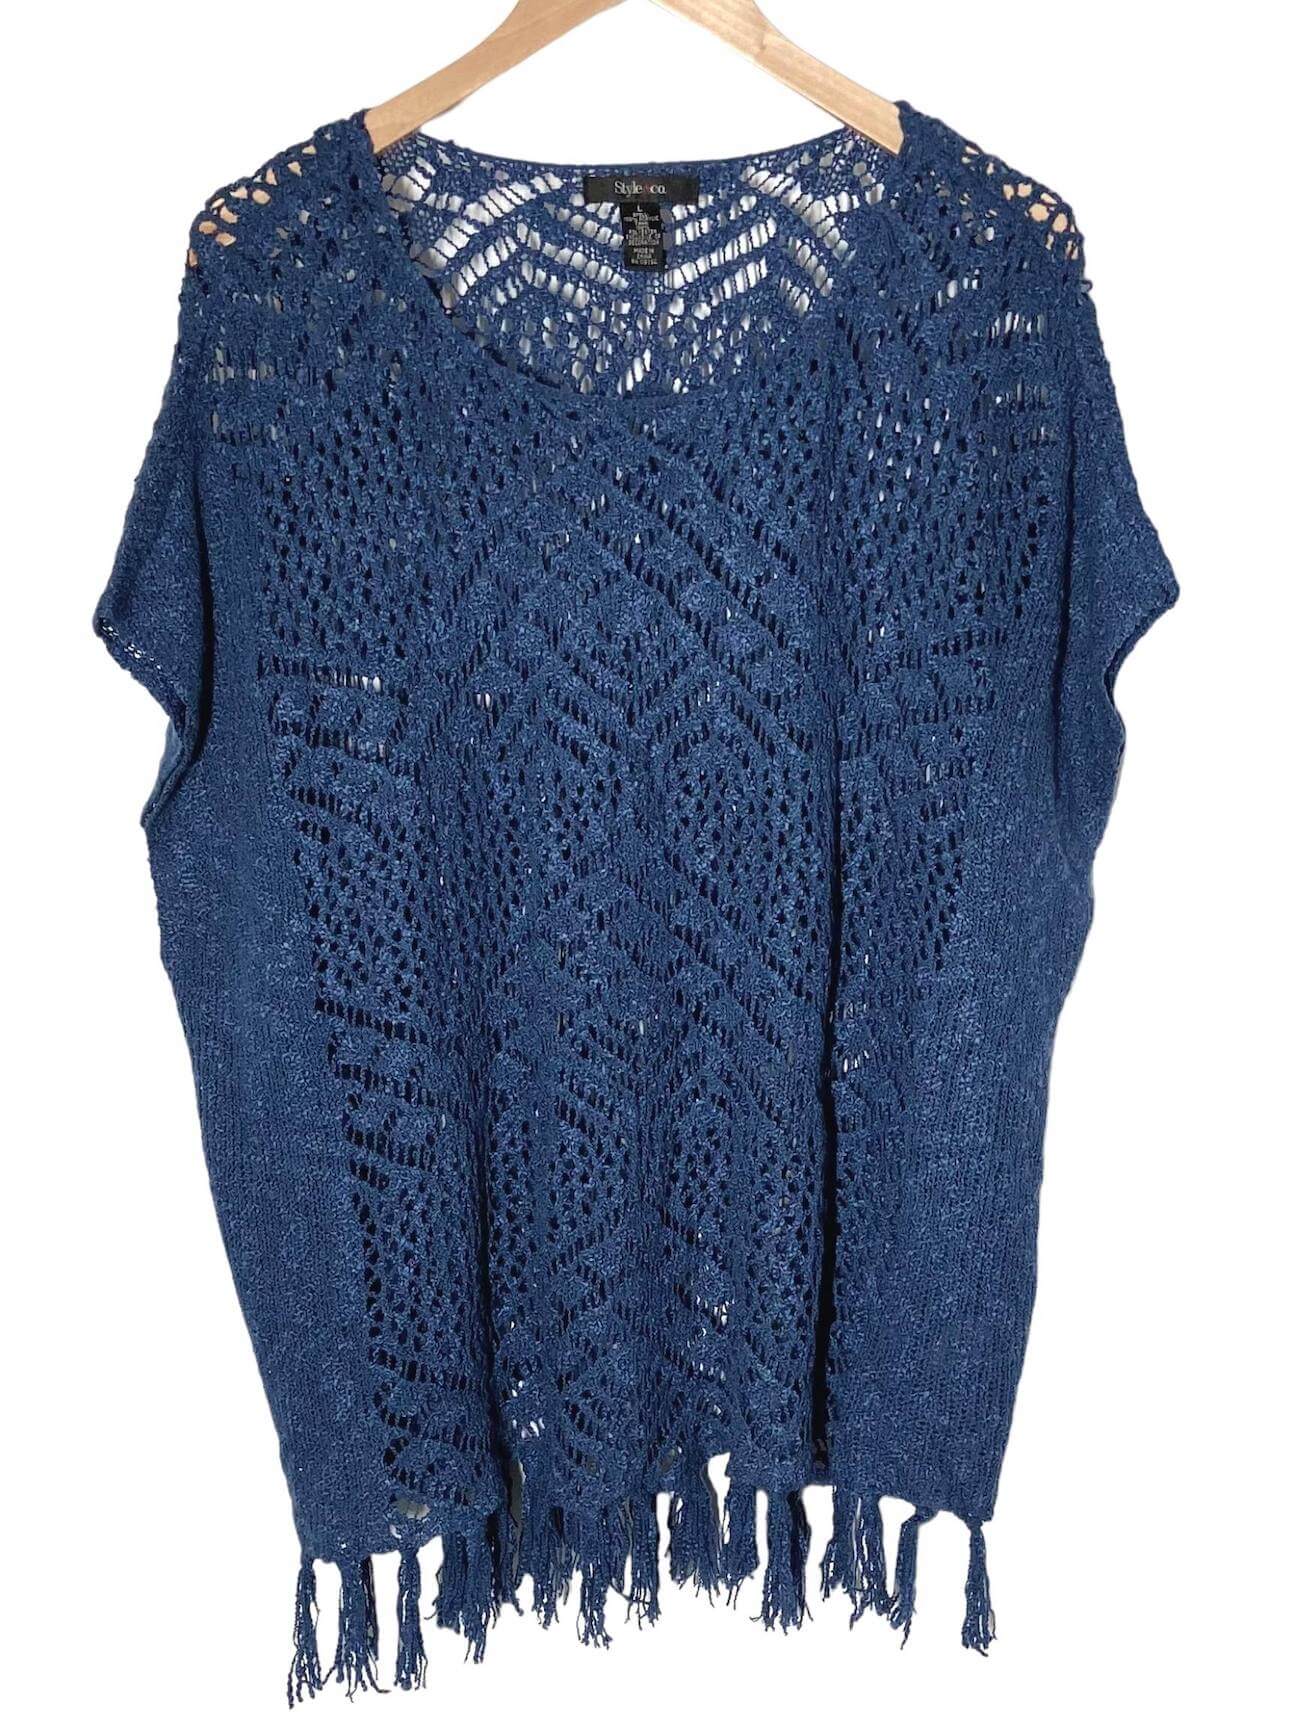 Soft Summer STYLE & CO open knit fringe sweater